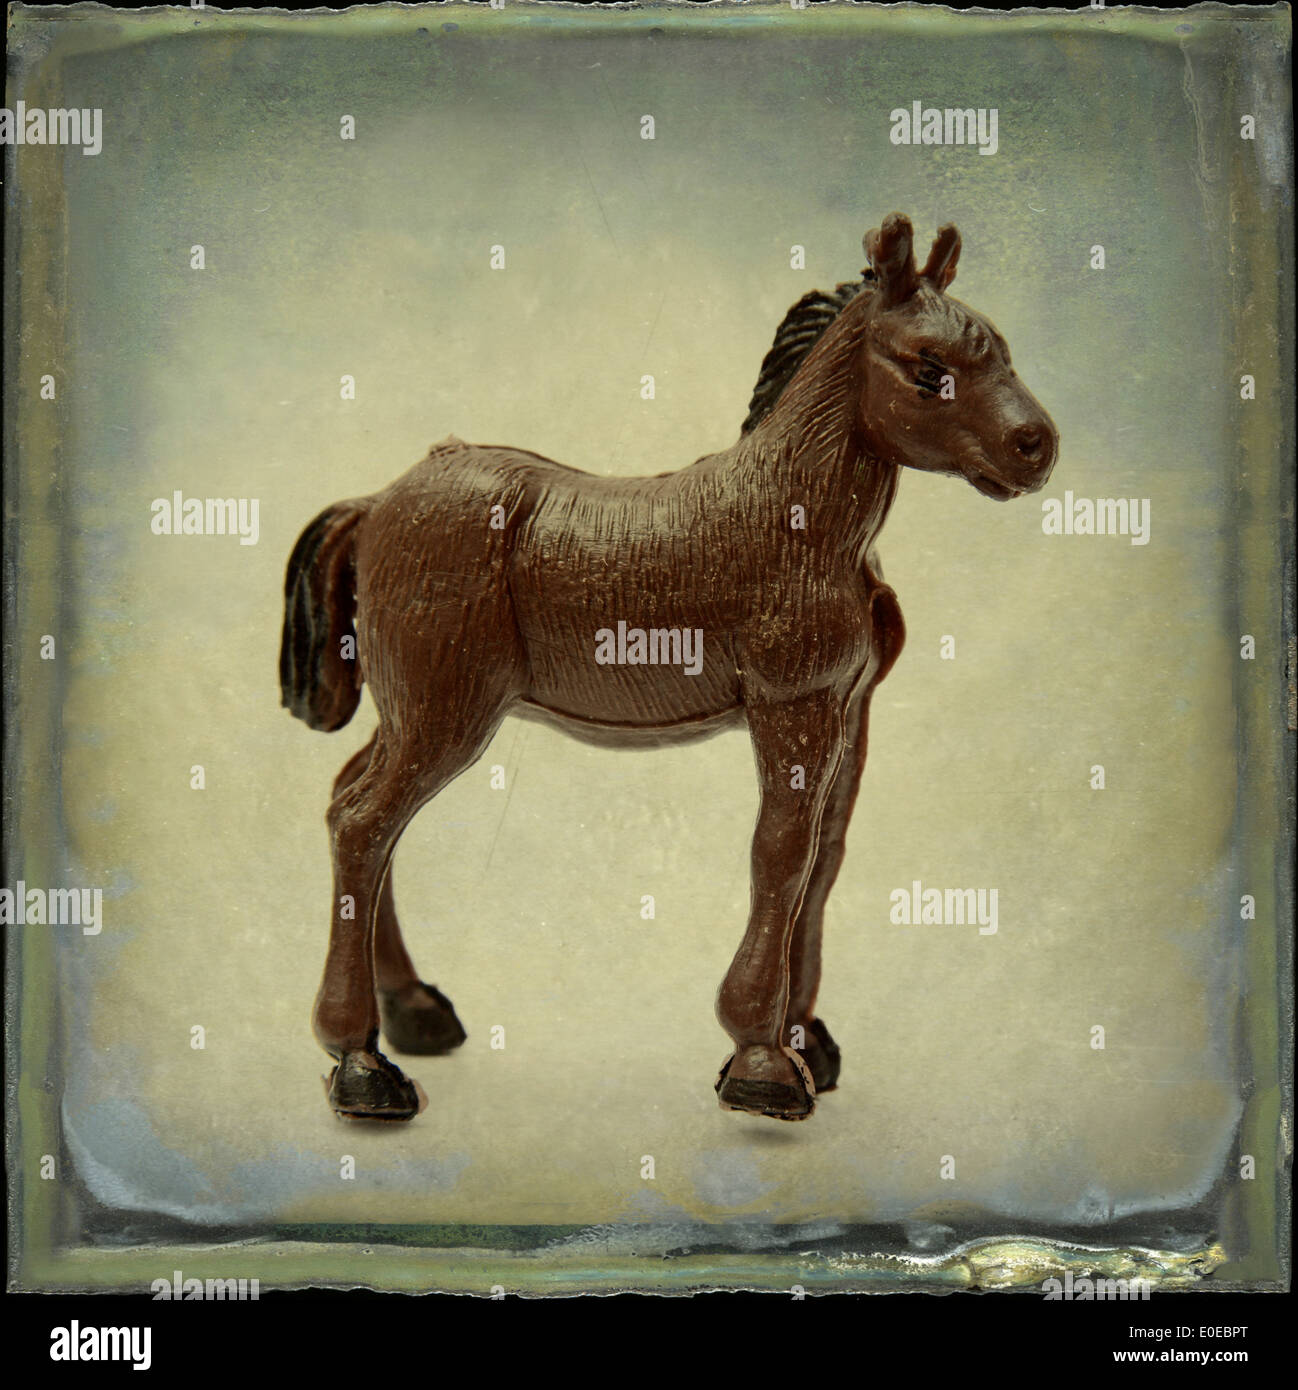 Old-fashioned plastic horse figurine - art-effect image Stock Photo